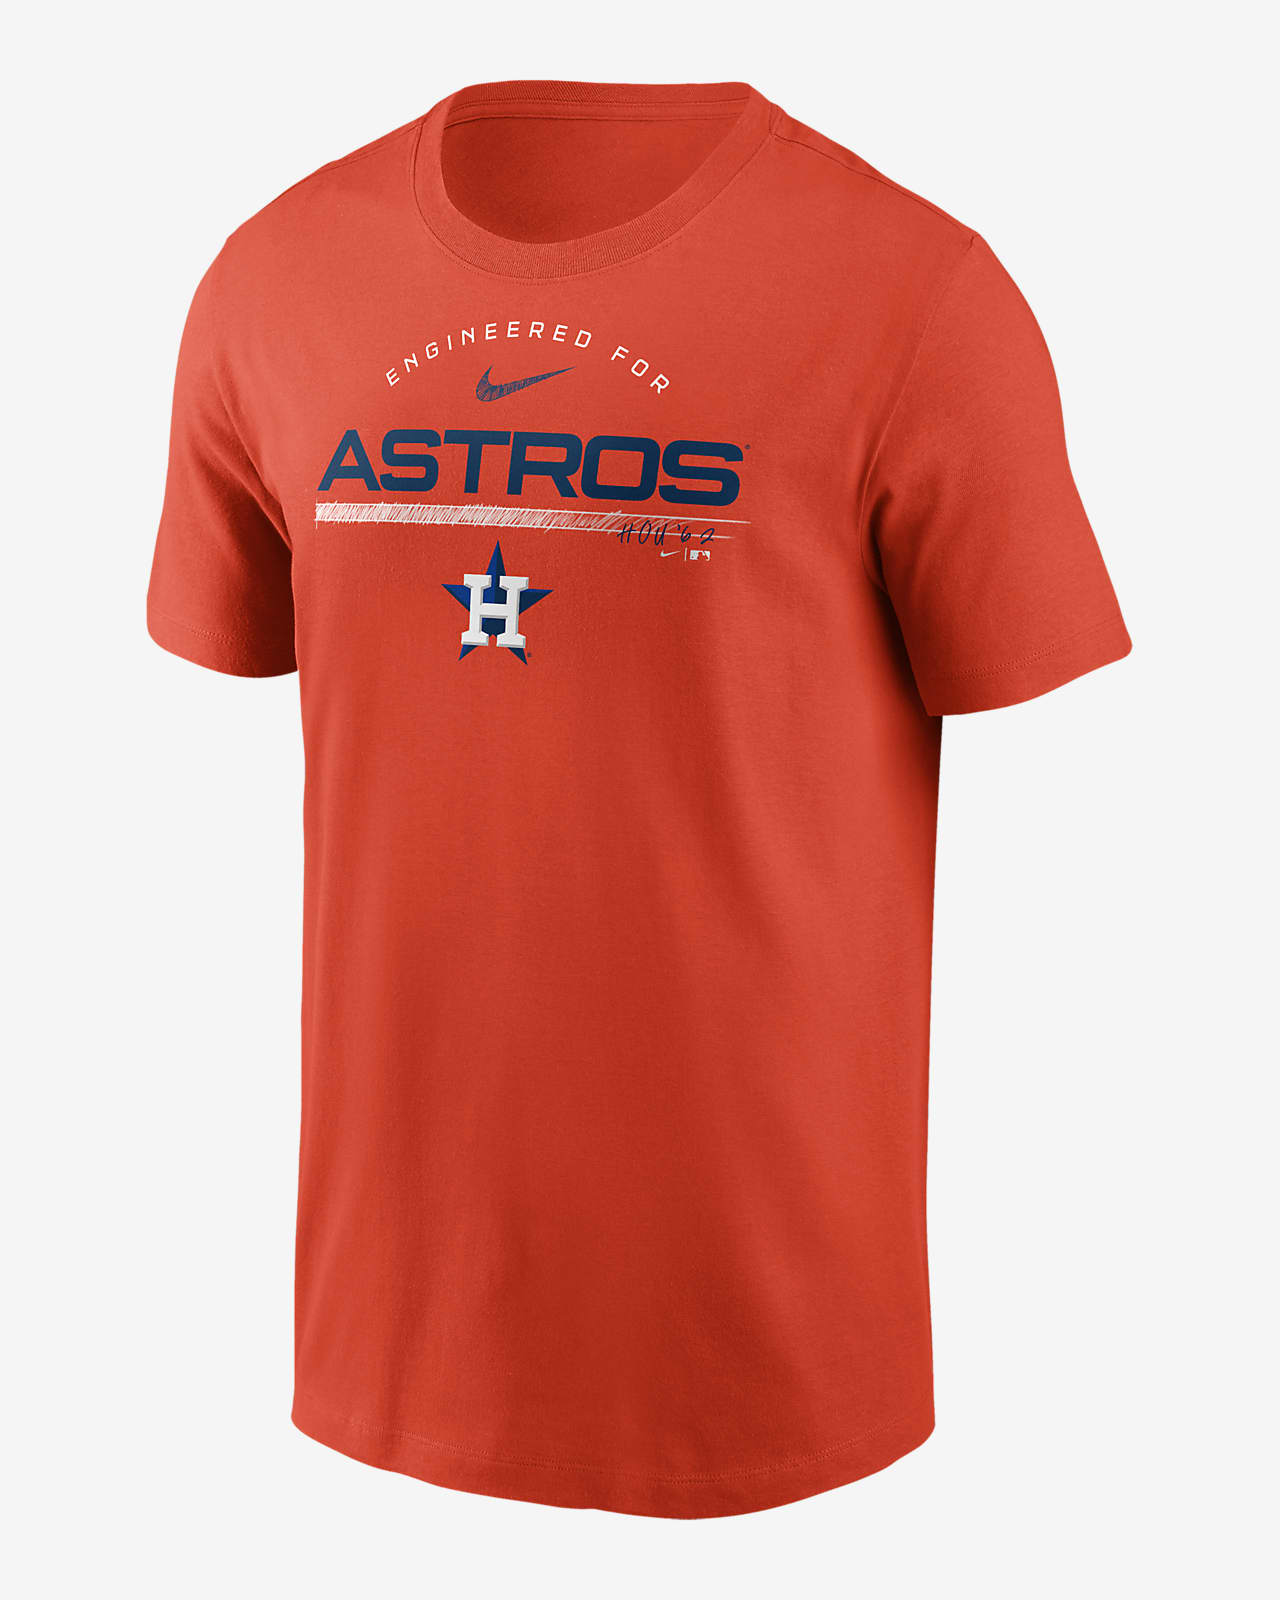 astros shirt men's